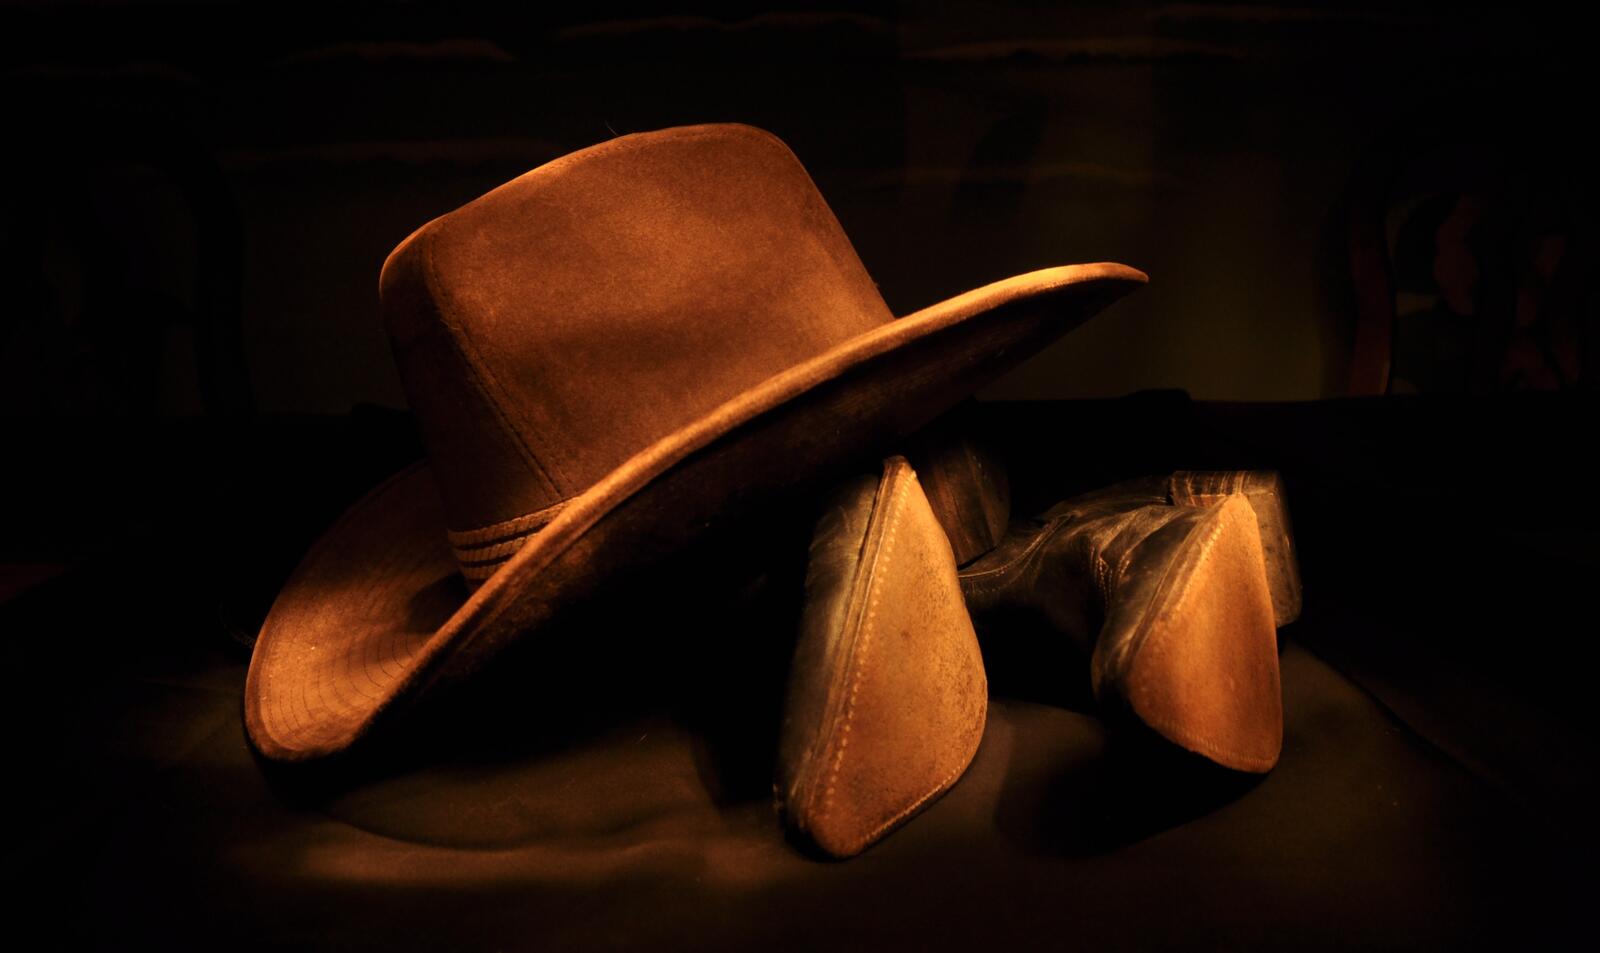 Wallpapers cowboy hat cowboy boots light on the desktop